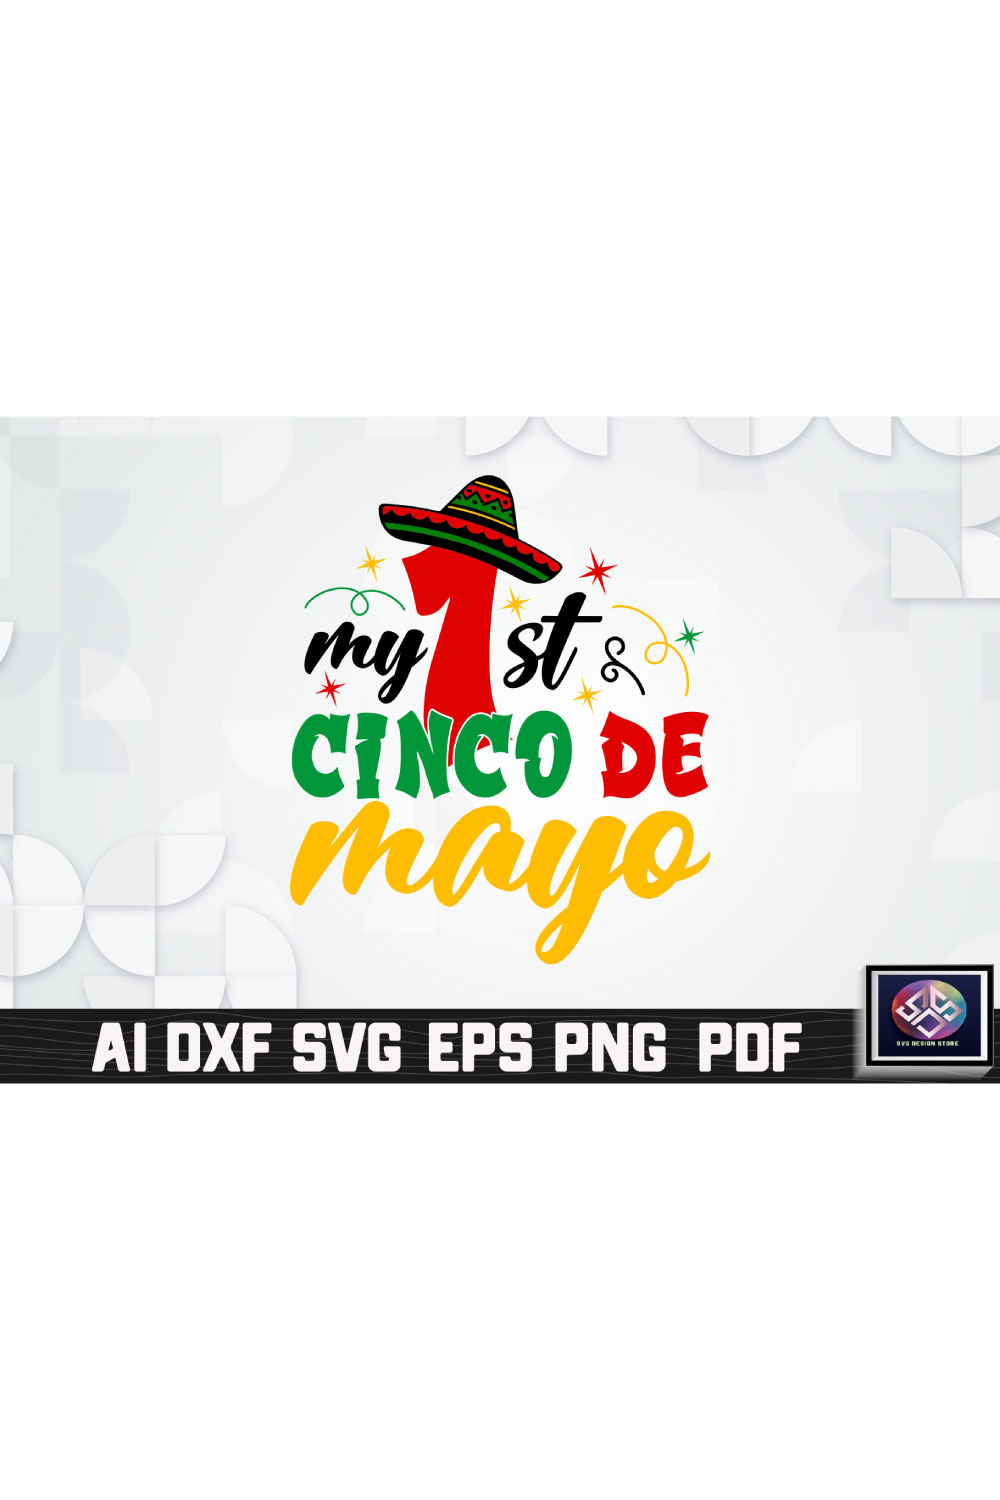 My 1st Cinco De Mayo pinterest preview image.